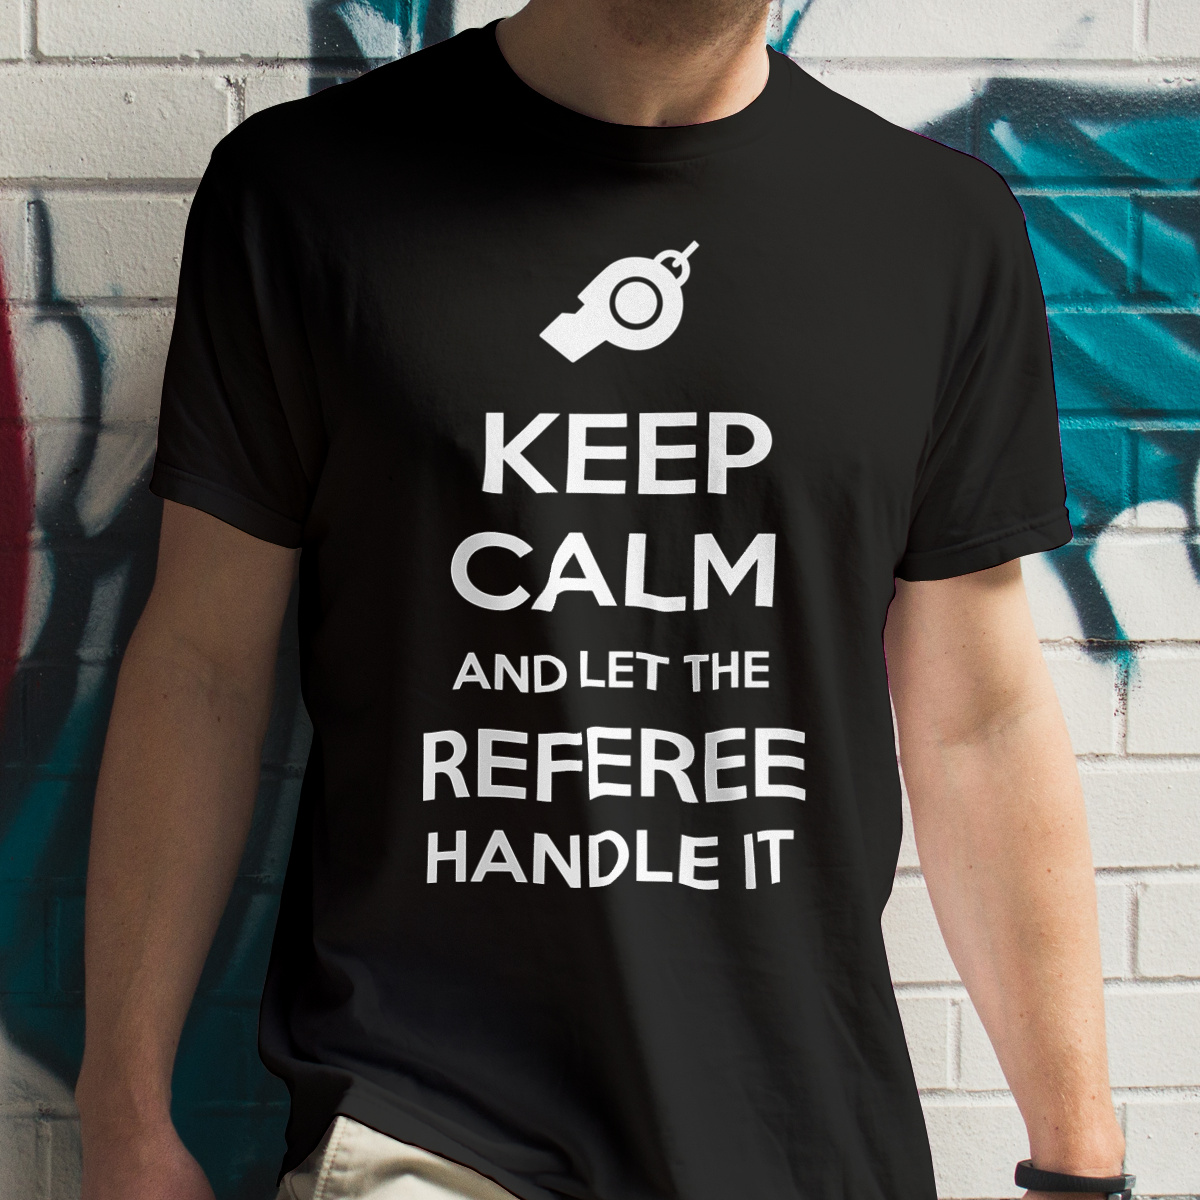 Keep Calm and Let the Referee Handle It - Męska Koszulka Czarna